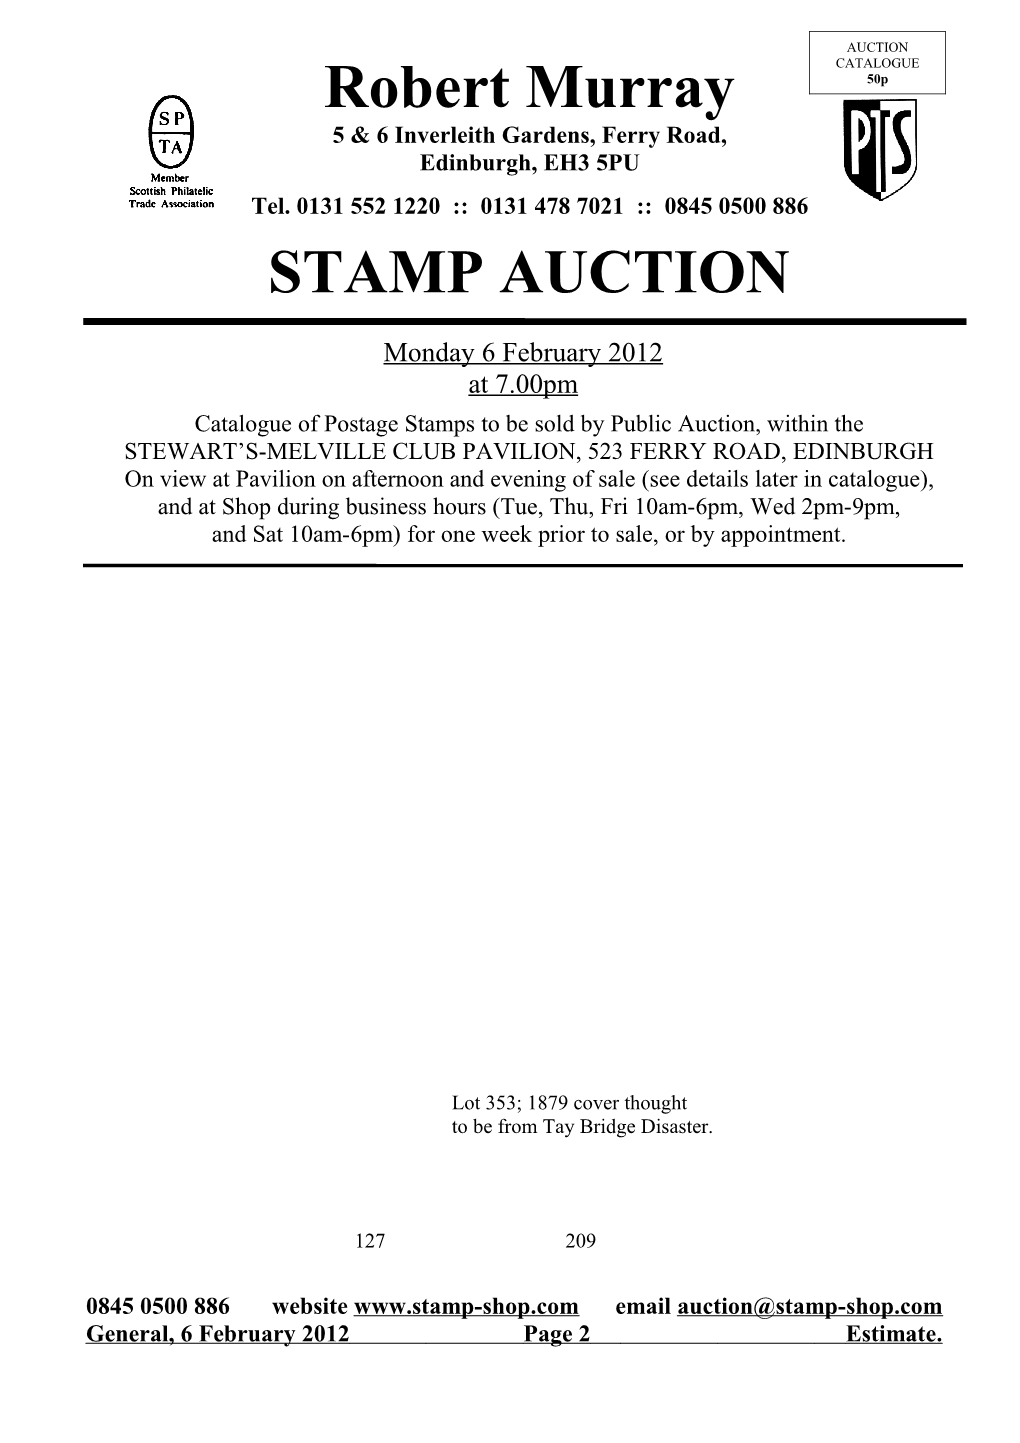 Robert Murray Stamp Auction s4